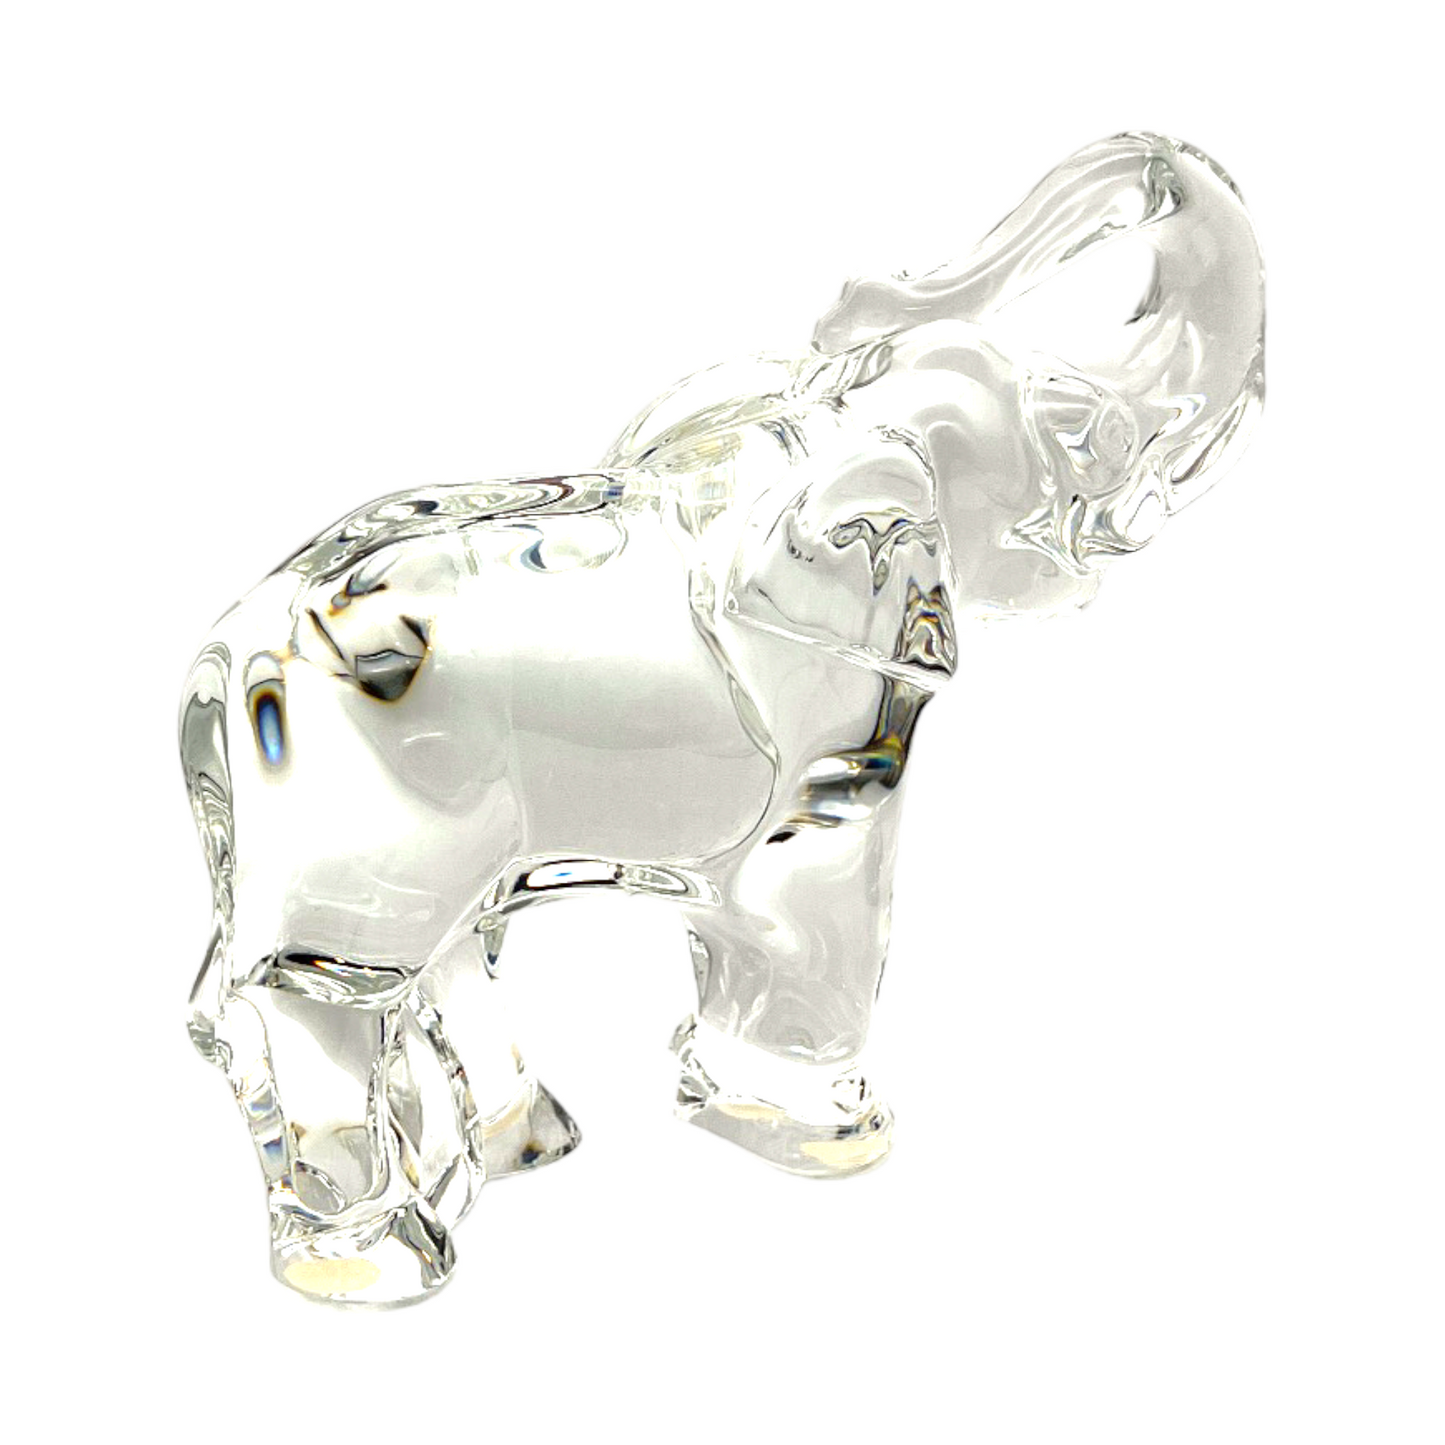 Baccarat Crystal - Elephant - Signed - Mint - 6"